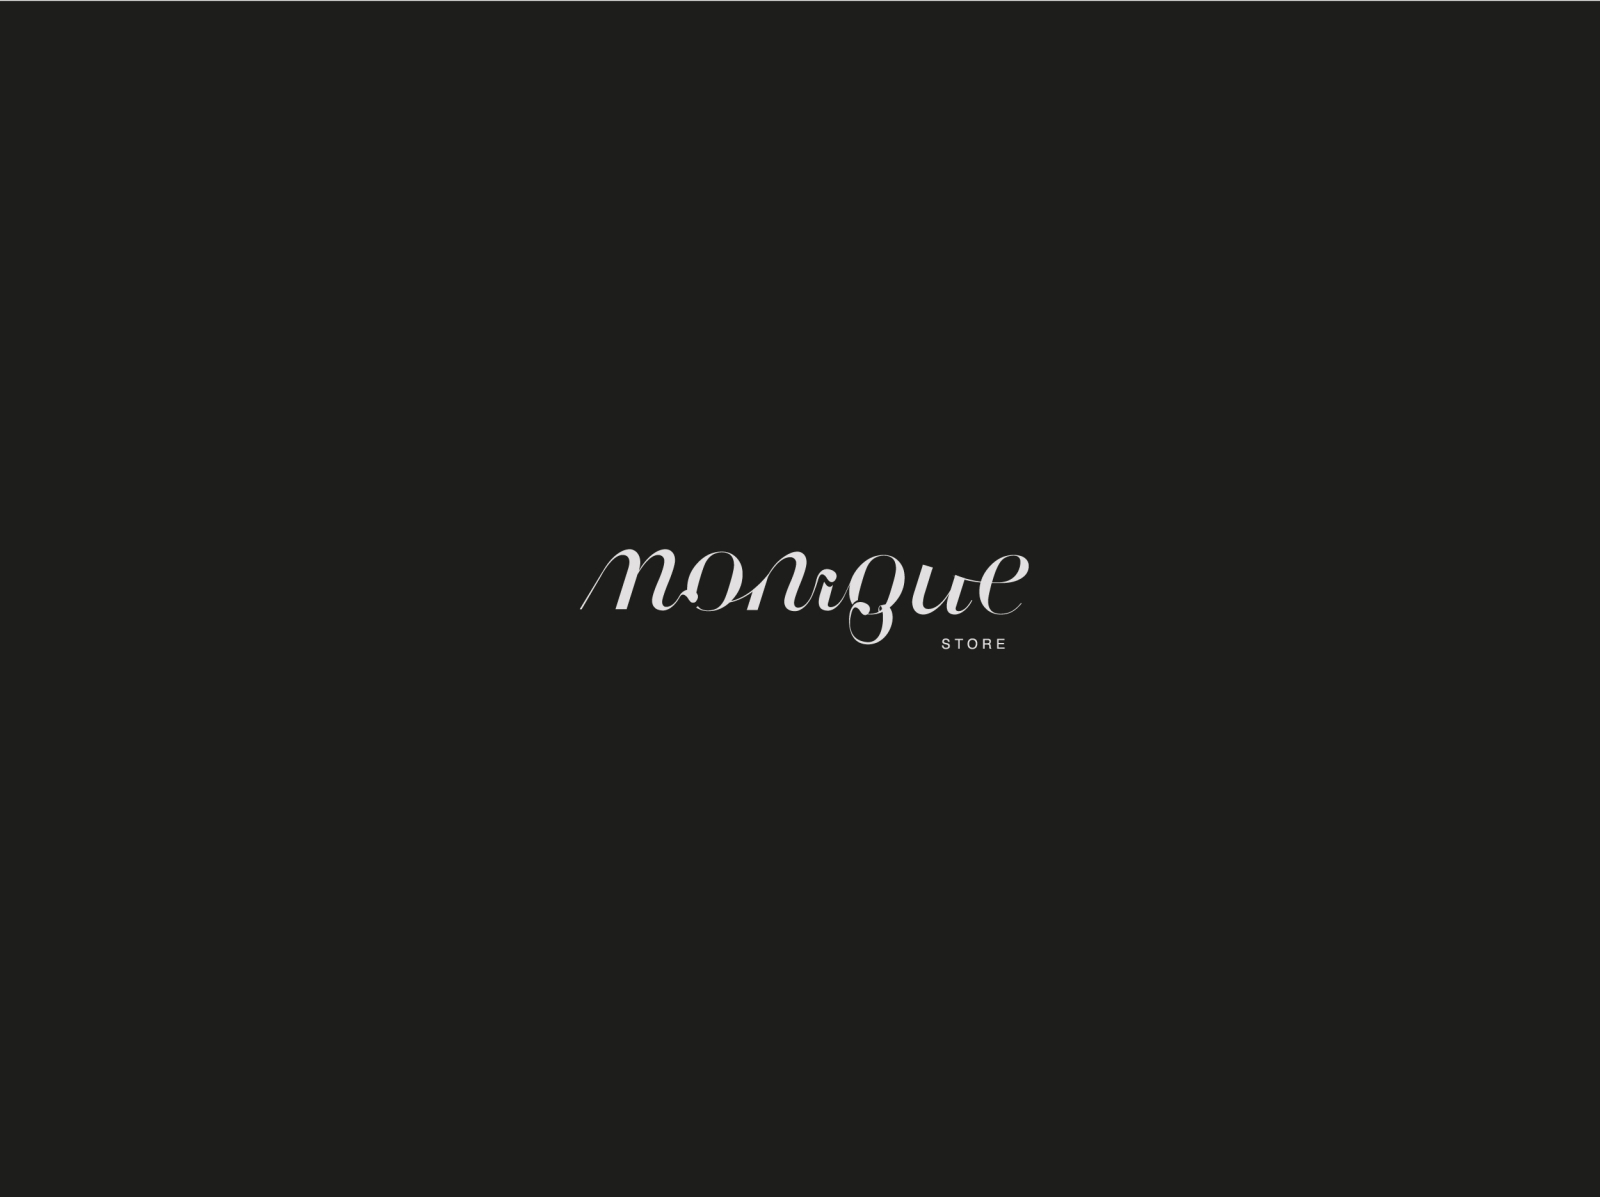 monique logo / cosmetic store by Olesia Patrina on Dribbble